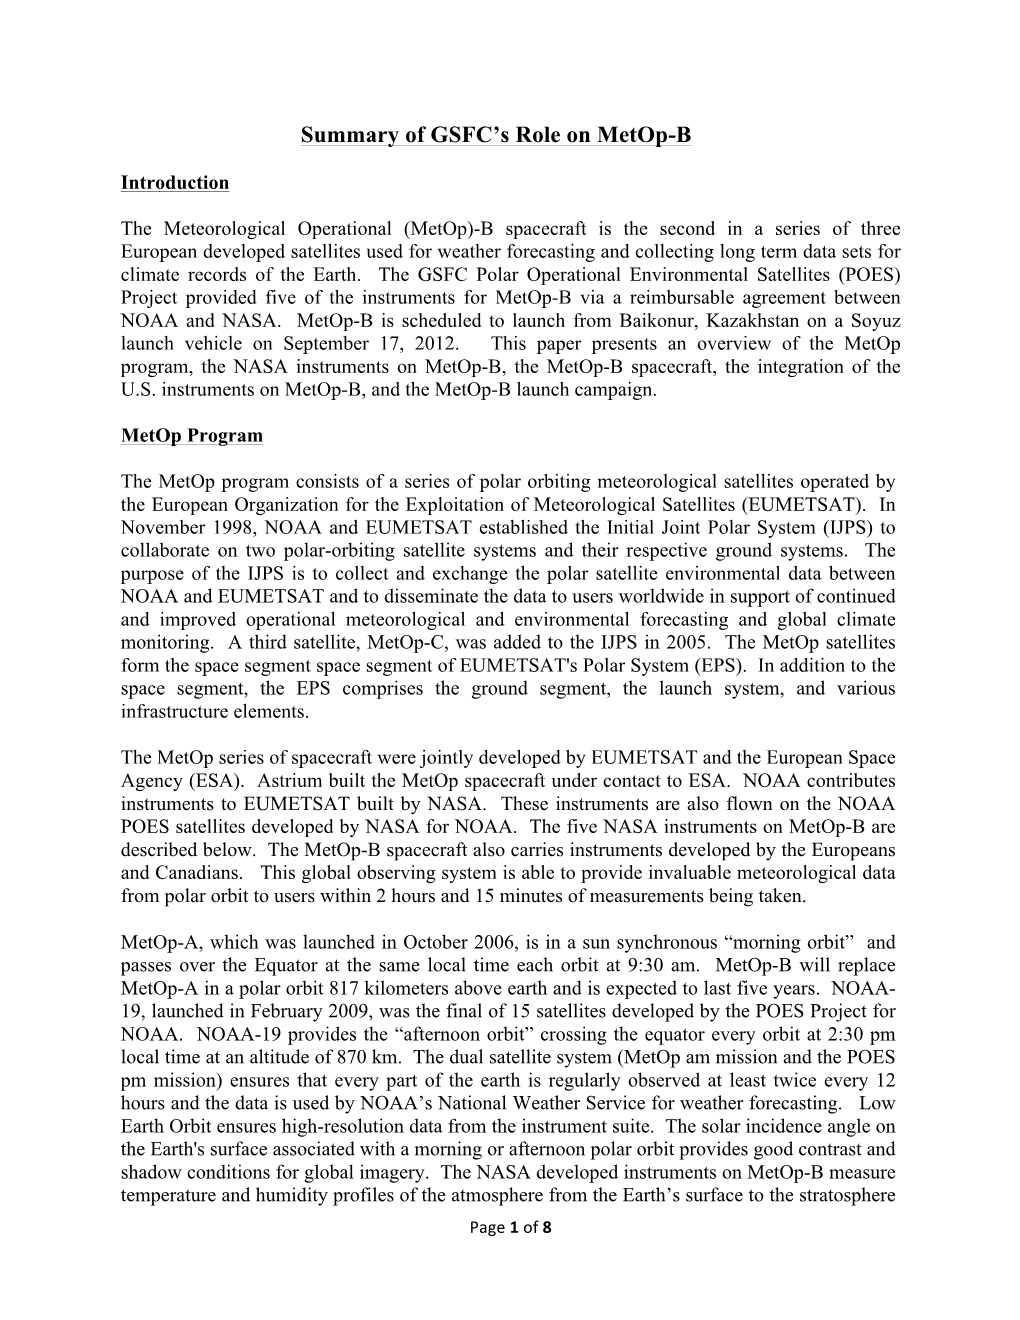 Summary of GSFC Role on Metop-B